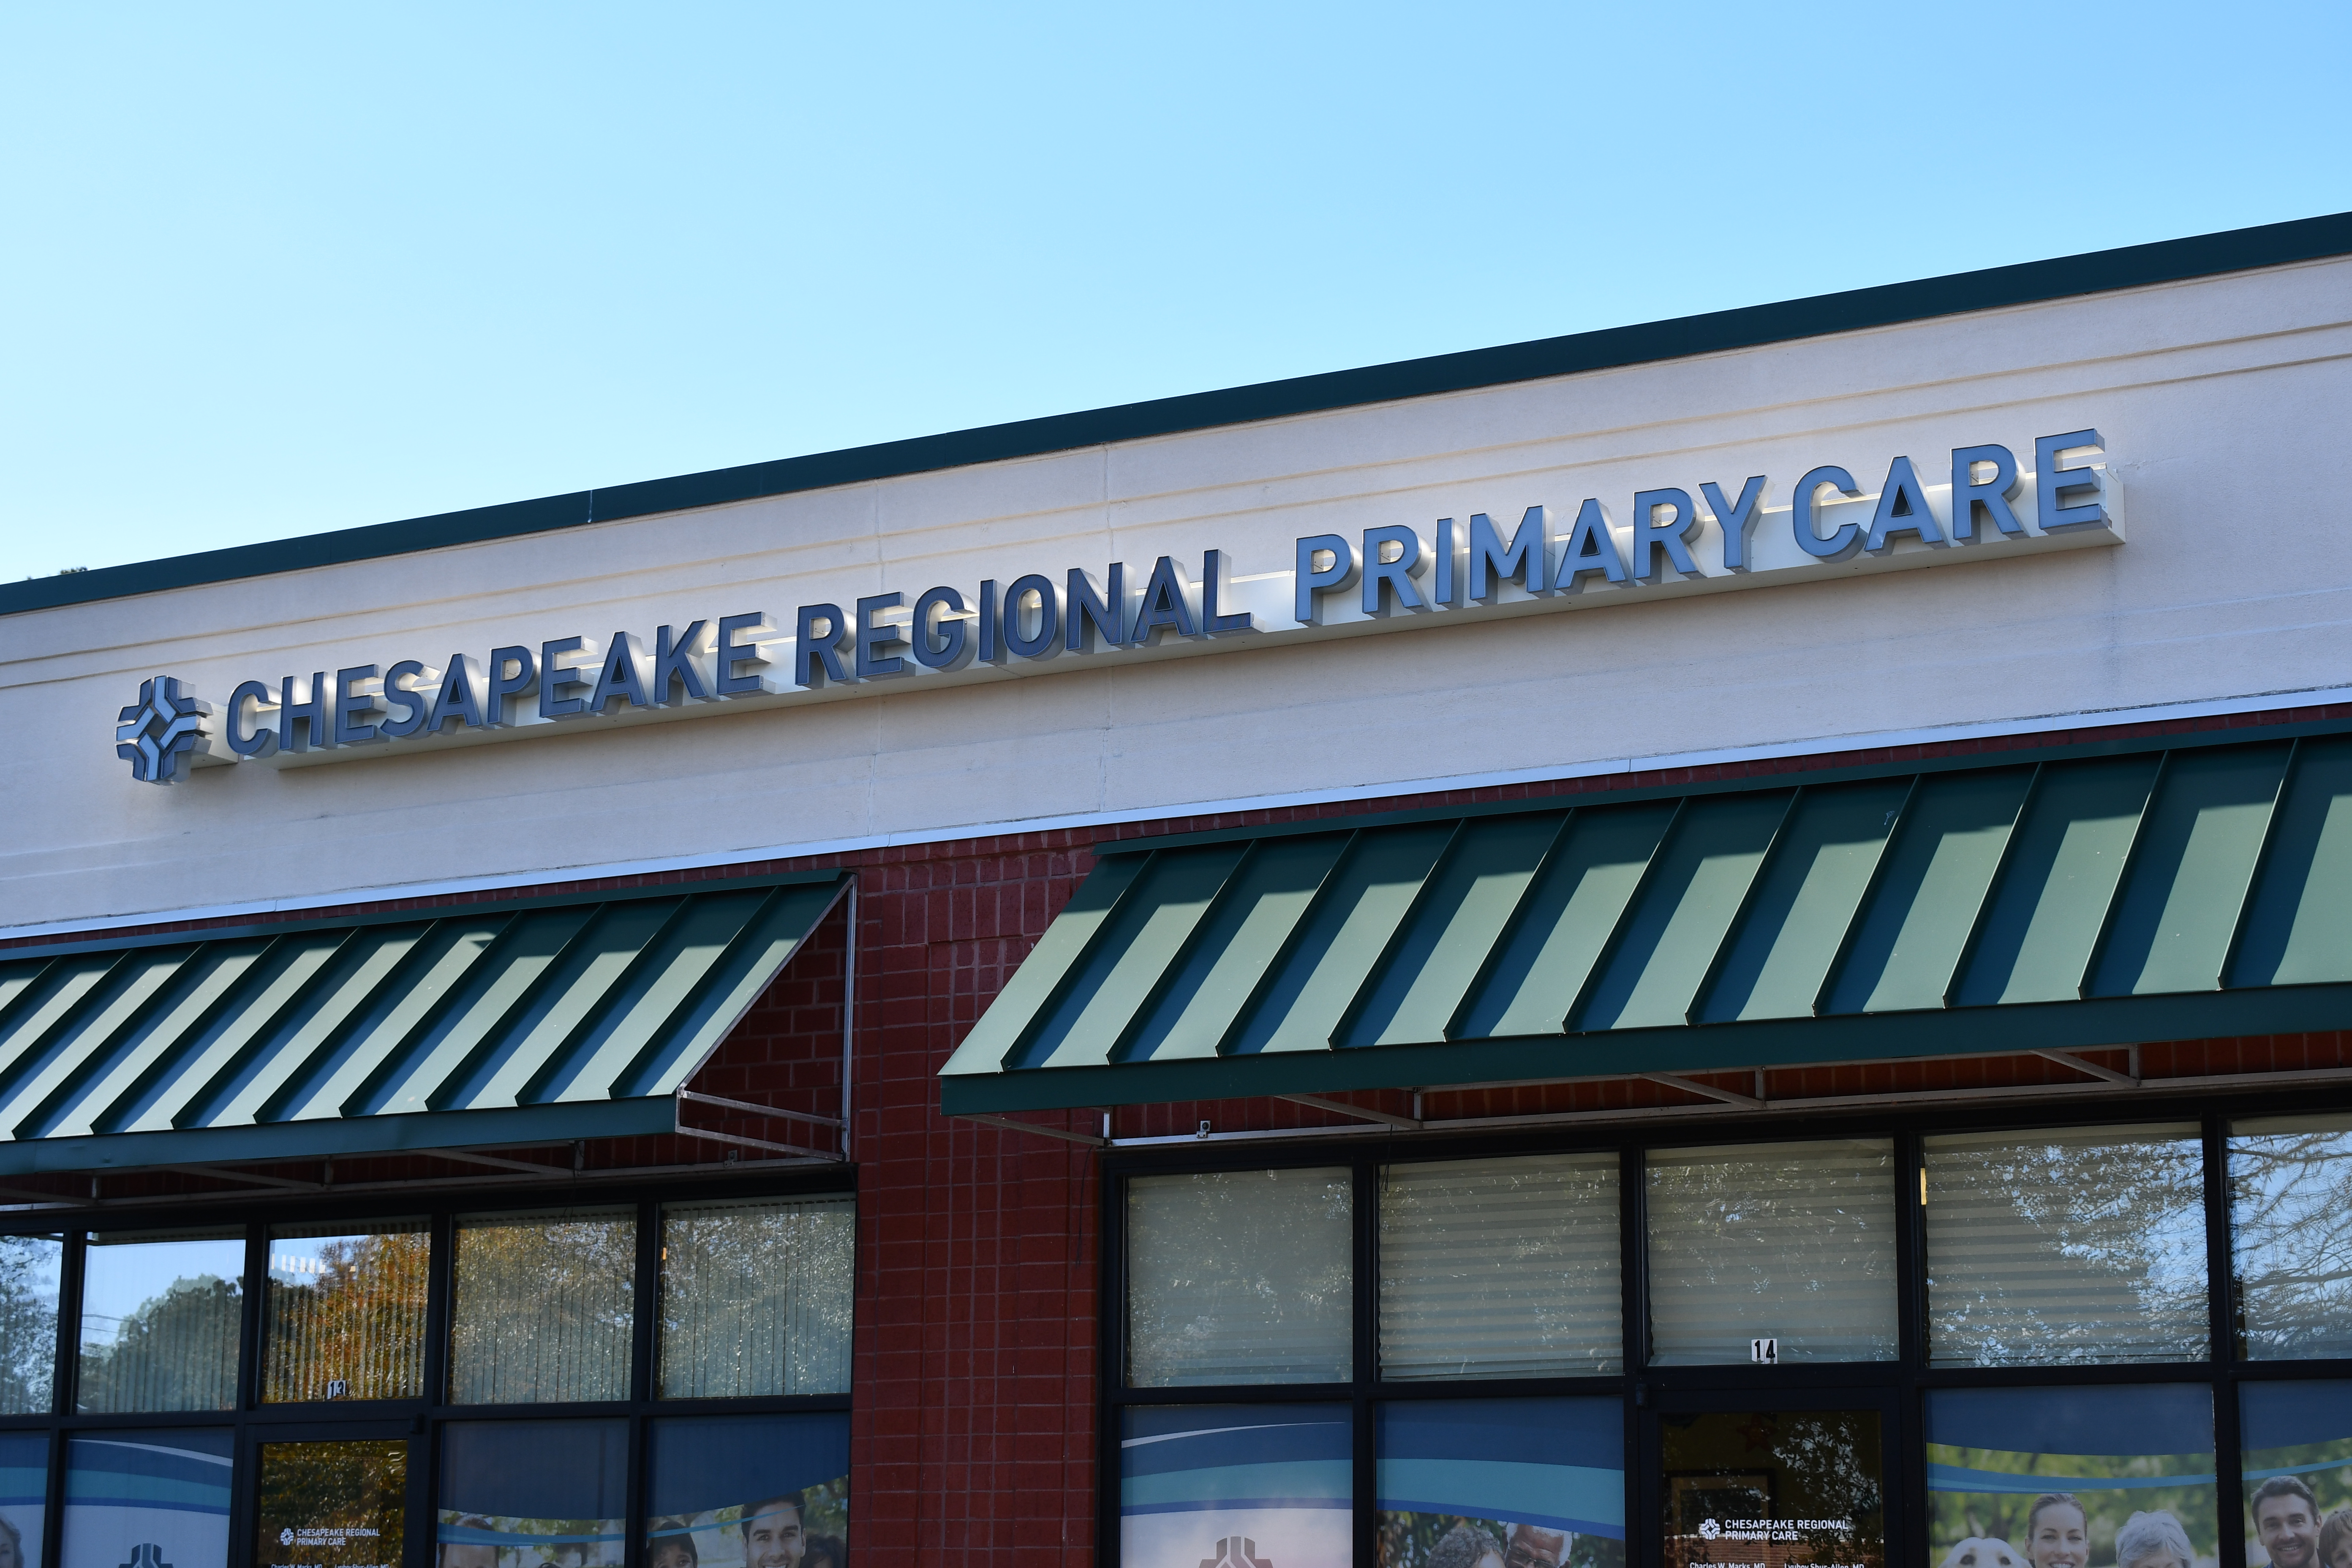 Chesapeake Regional Primary Care - Mt. Pleasant entrance